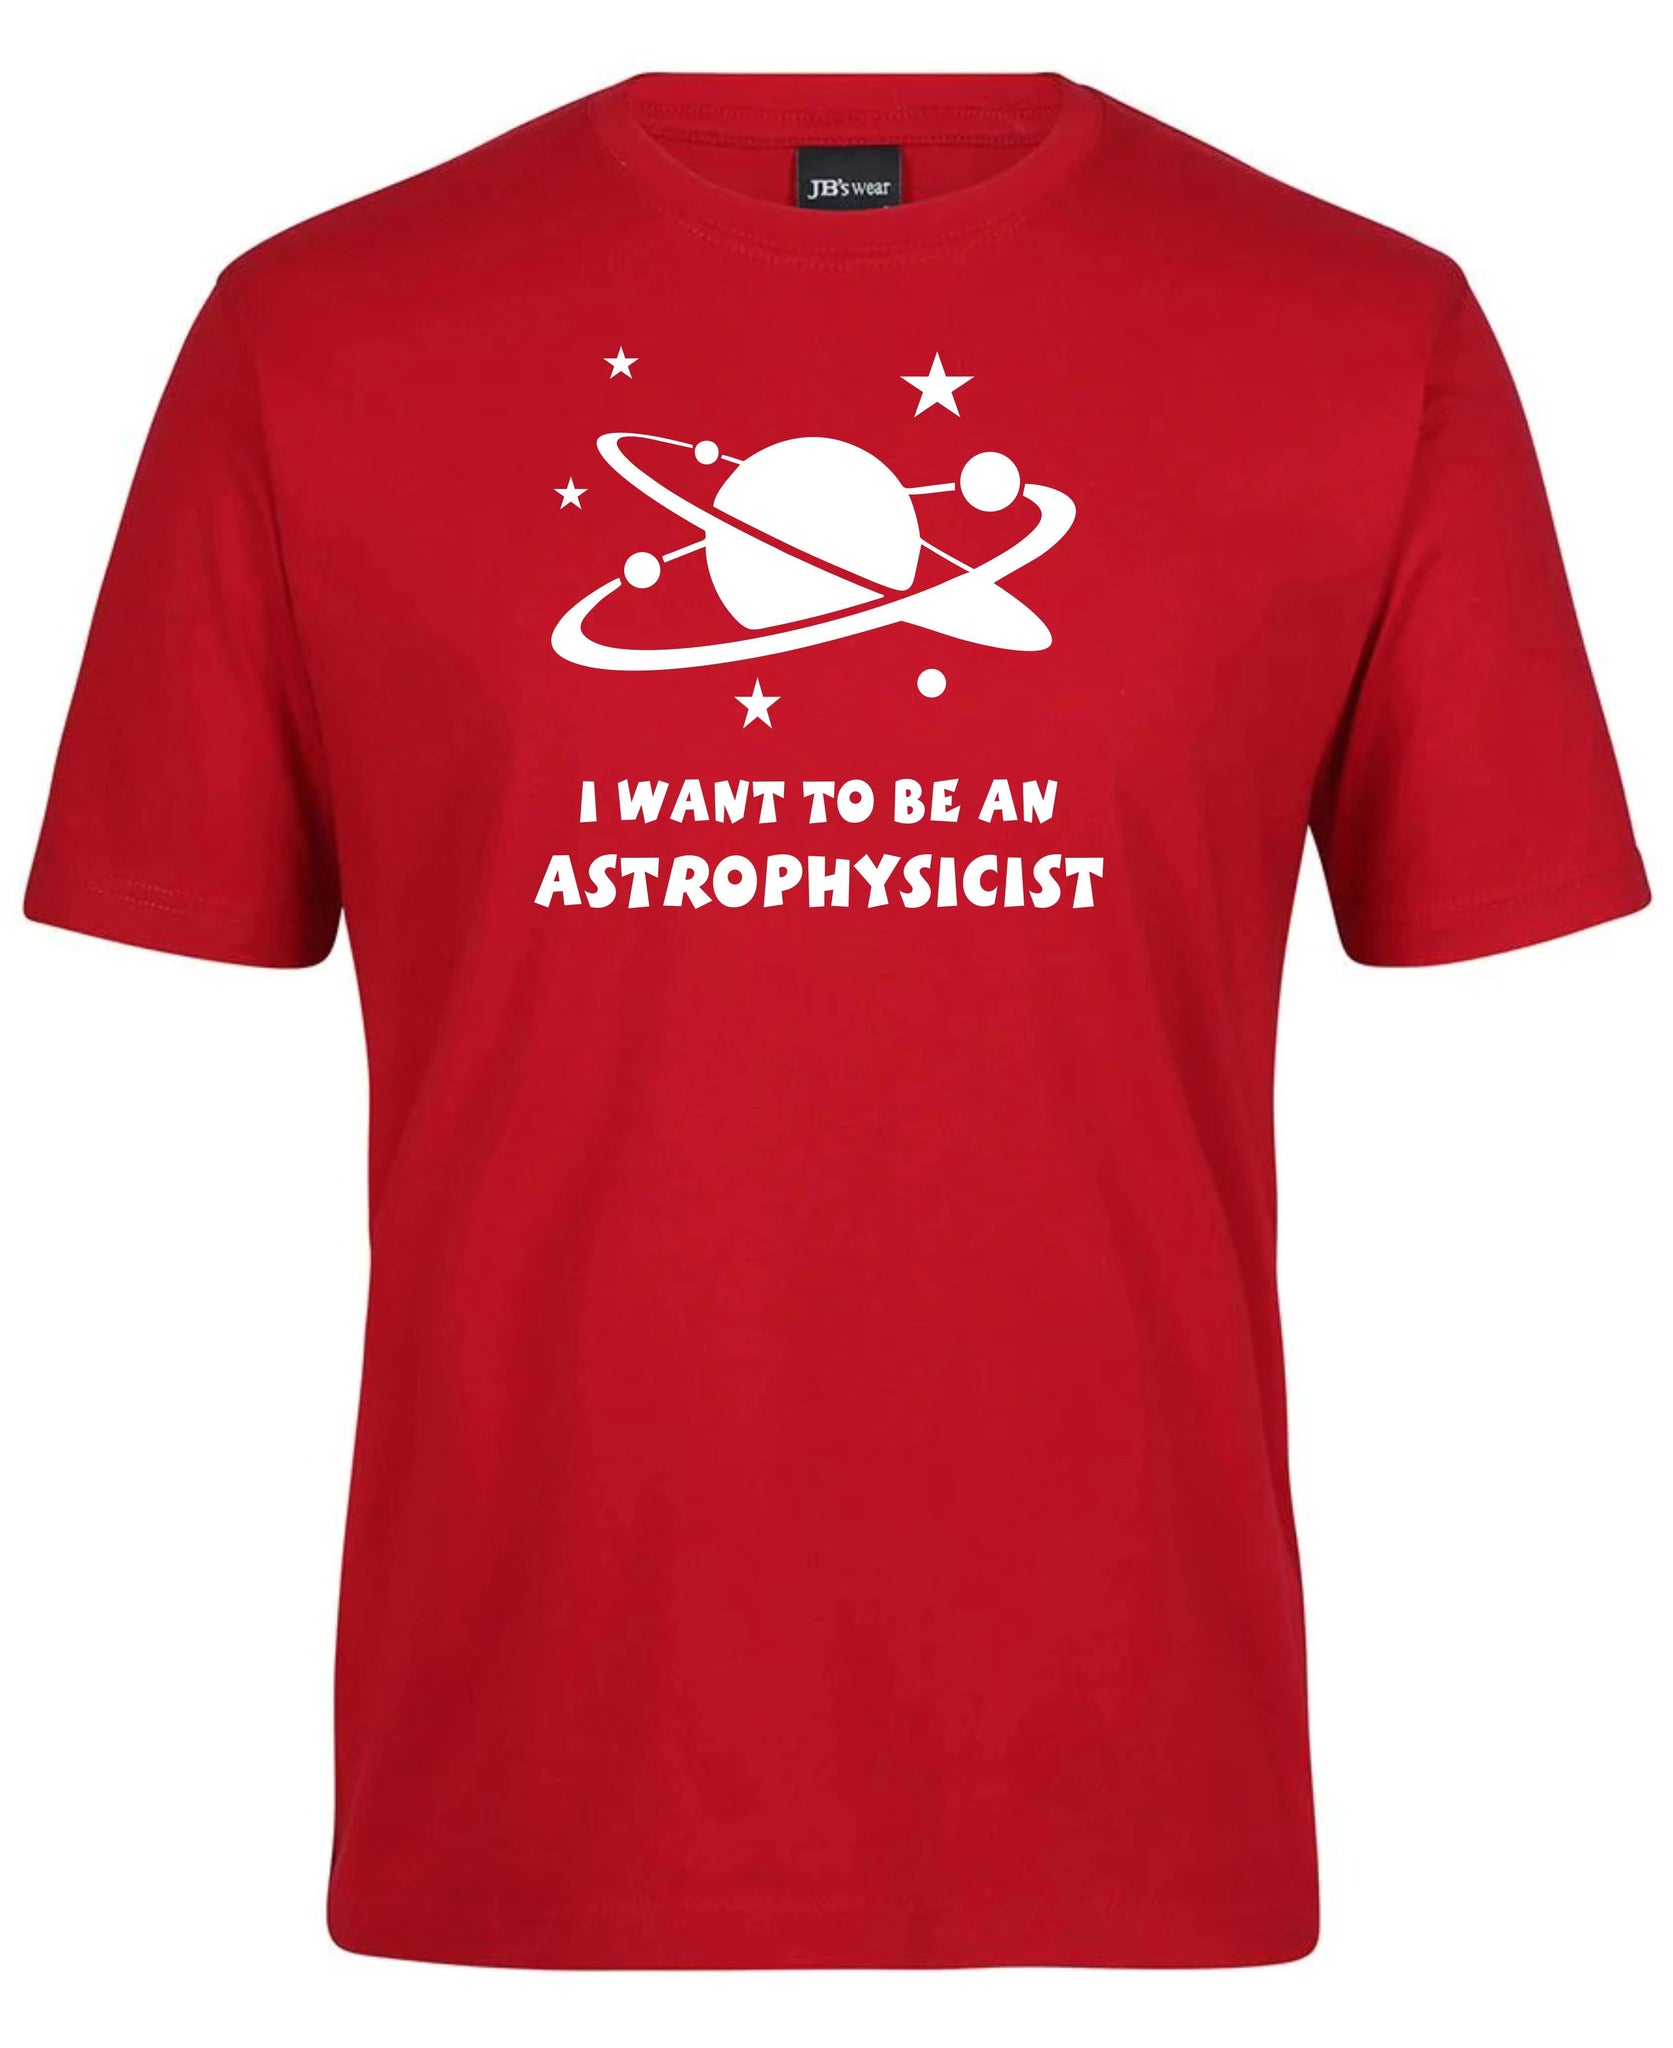 Ready to Print Design: "Astrophysicist"